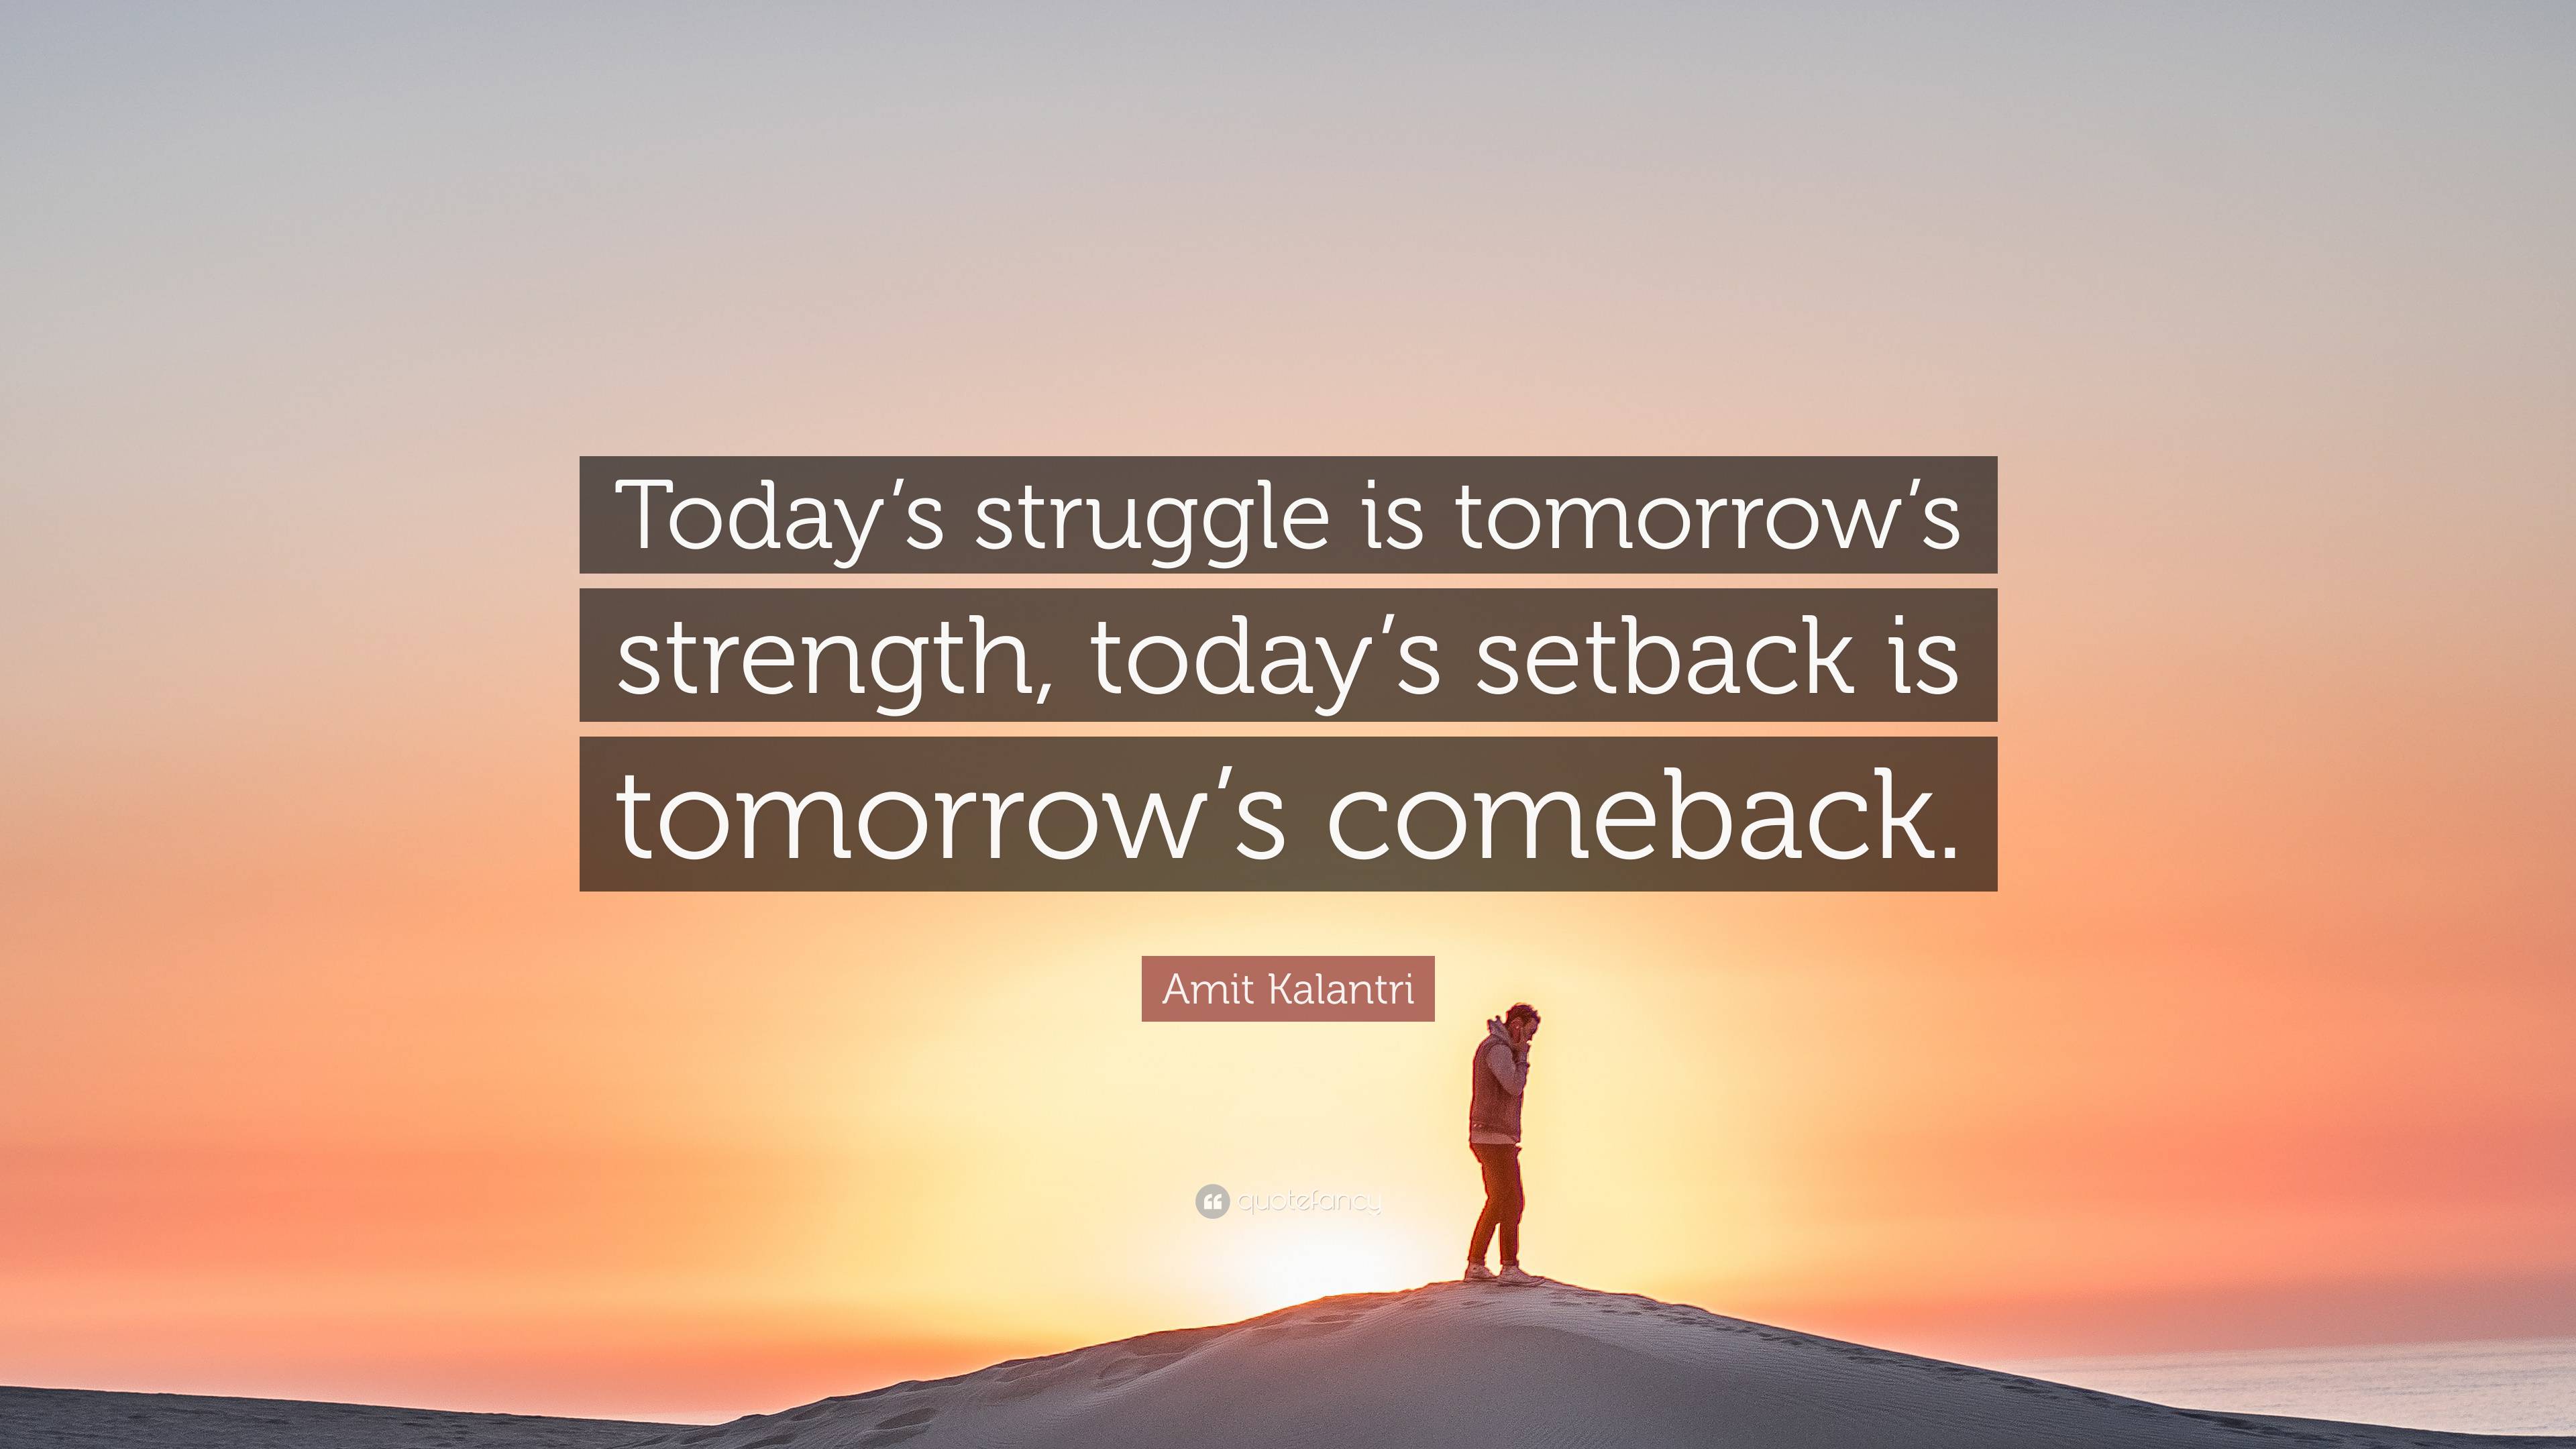 Amit Kalantri Quote: “Today's struggle is tomorrow's strength, today's  setback is tomorrow's comeback.”